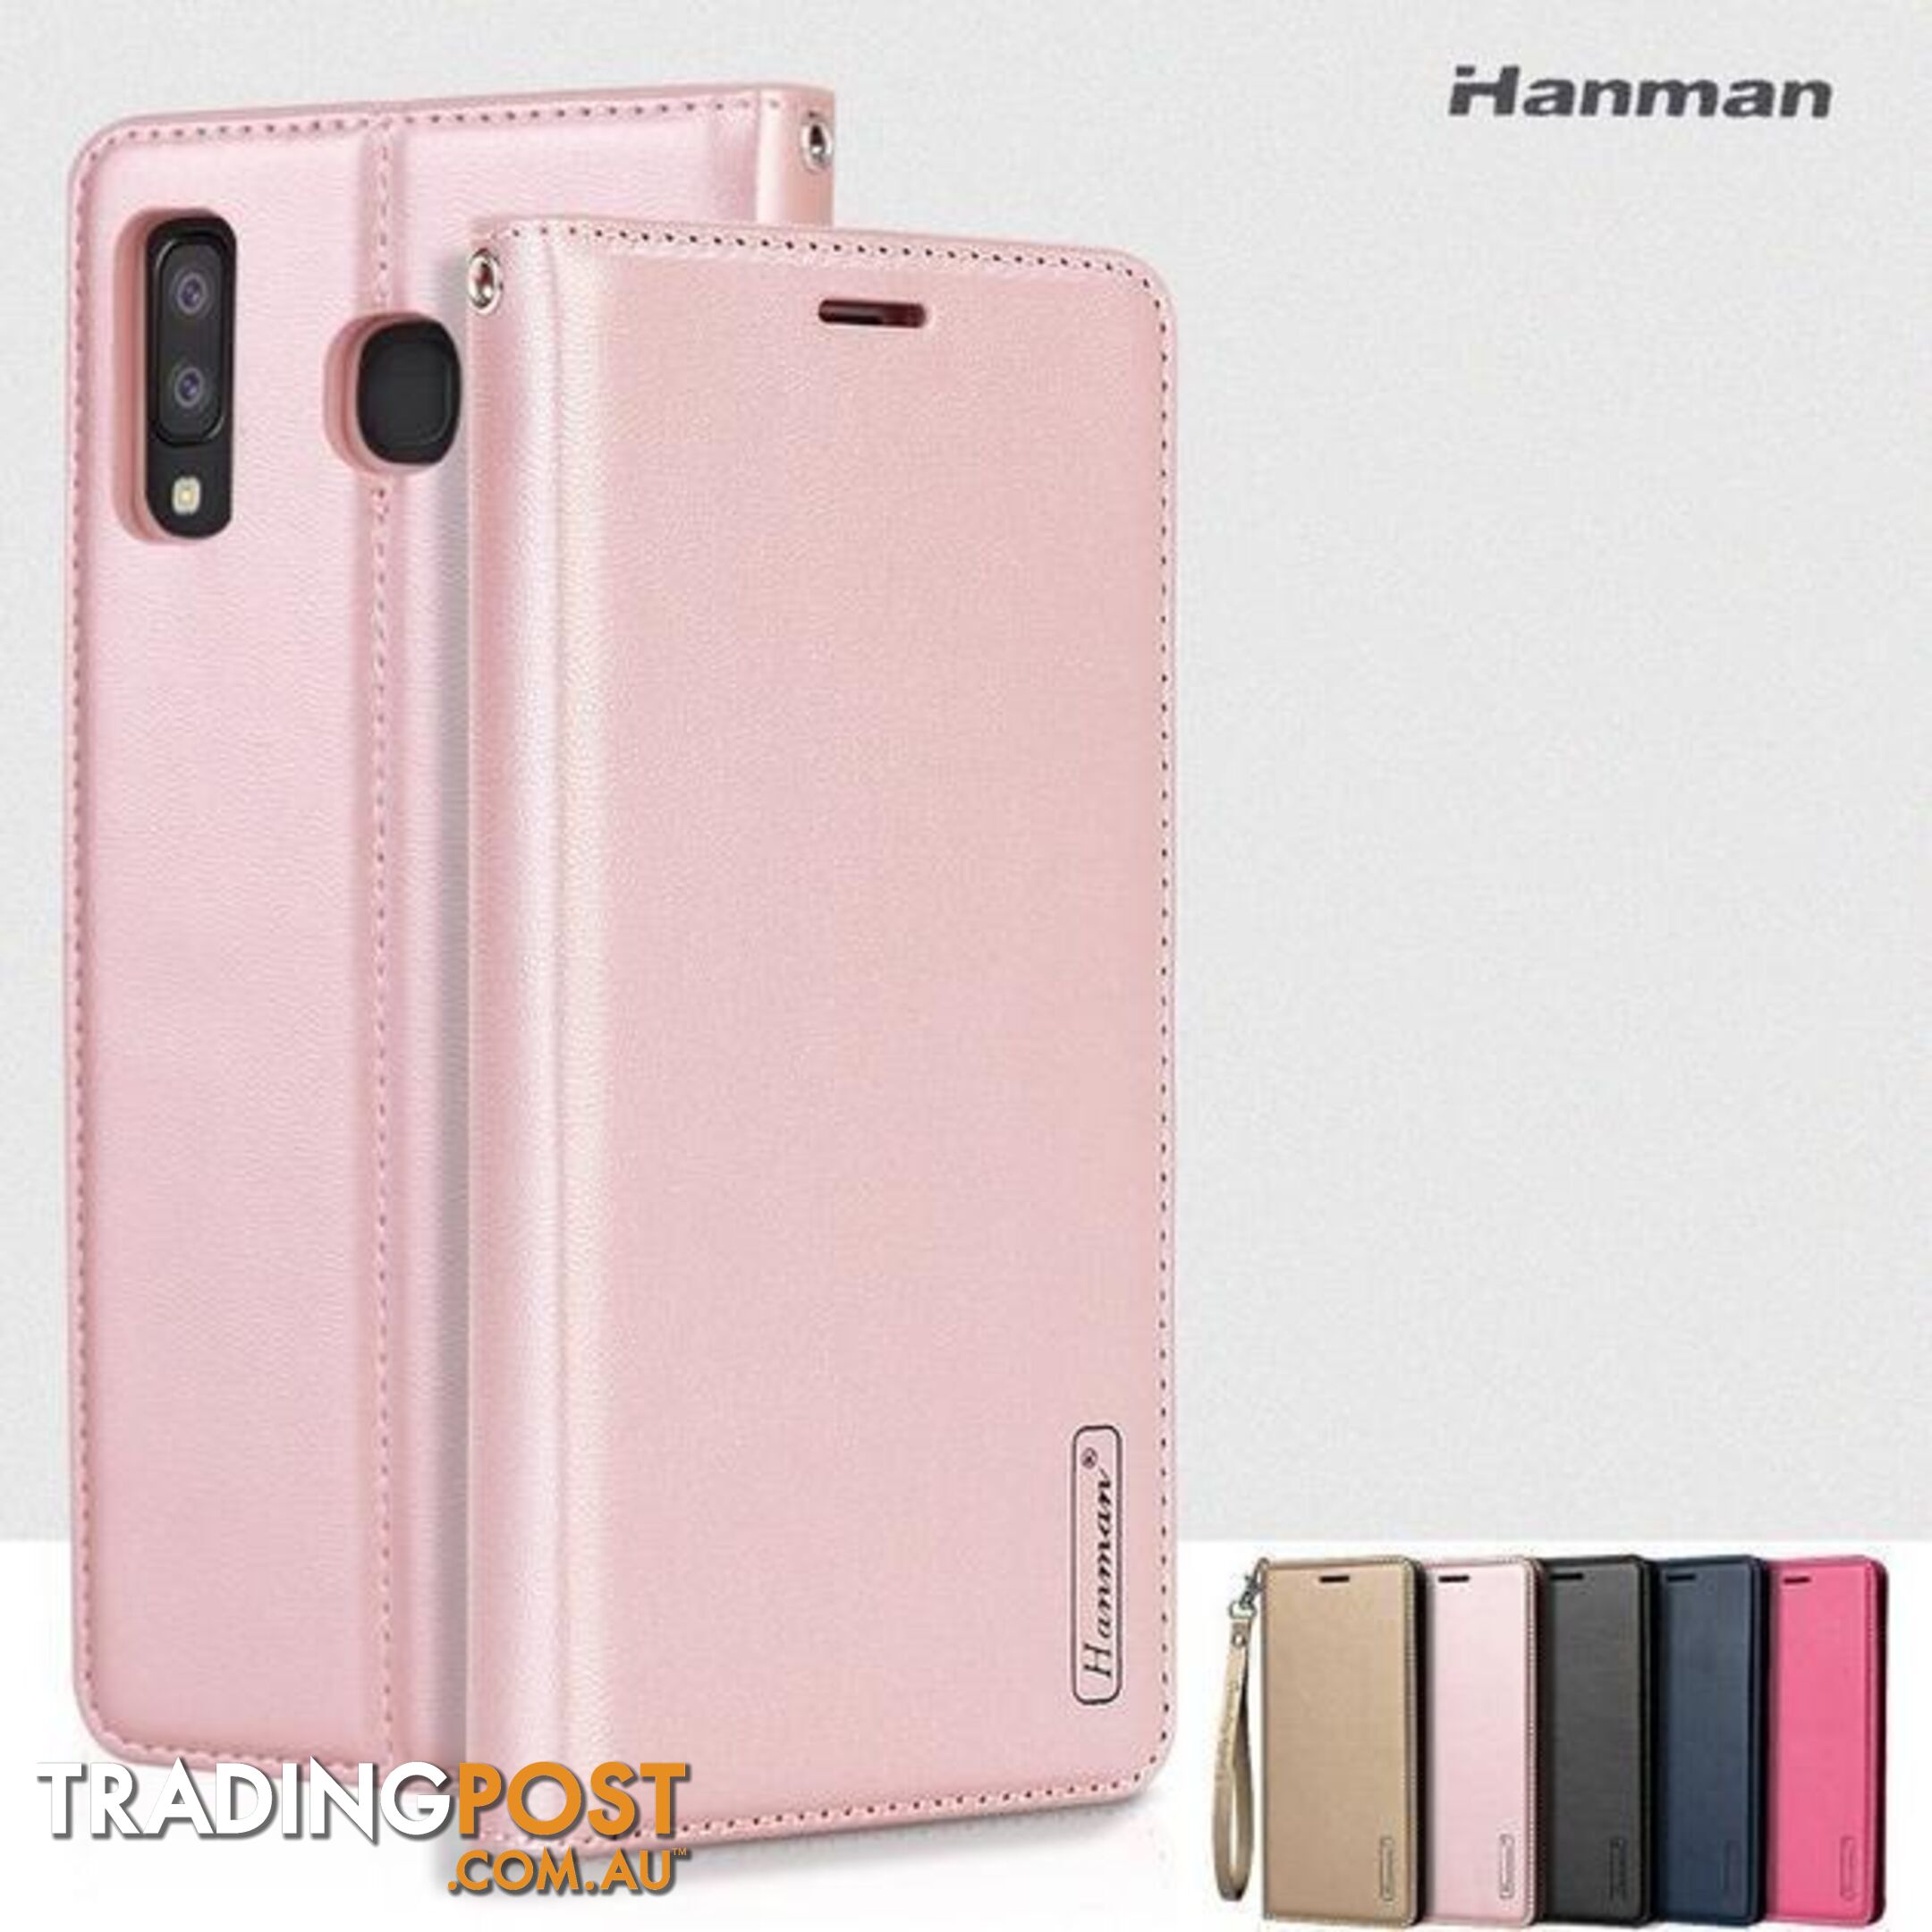 Samsung Galaxy Hanman Wallet Style Cases - 1001628 - Cases